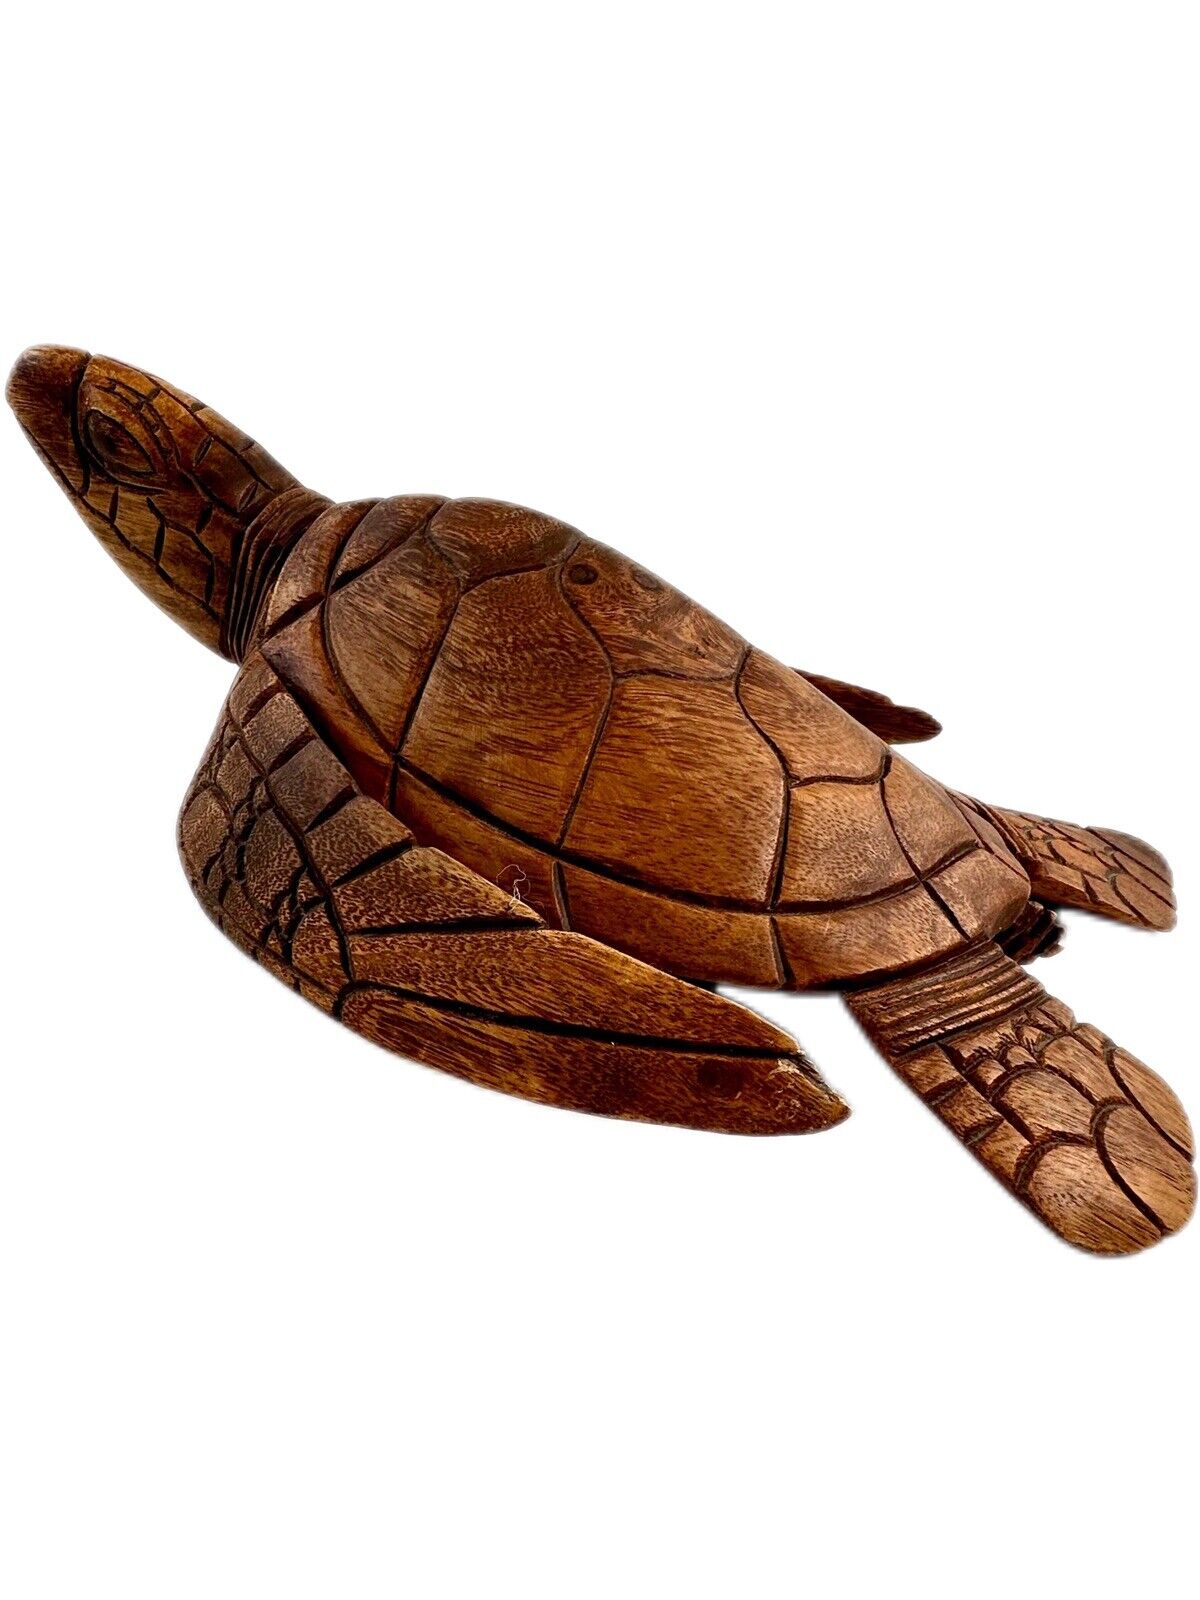 Wooden Sea Turtle Hand Carved Sculpture 13” Decor Figurine Statue Vintage